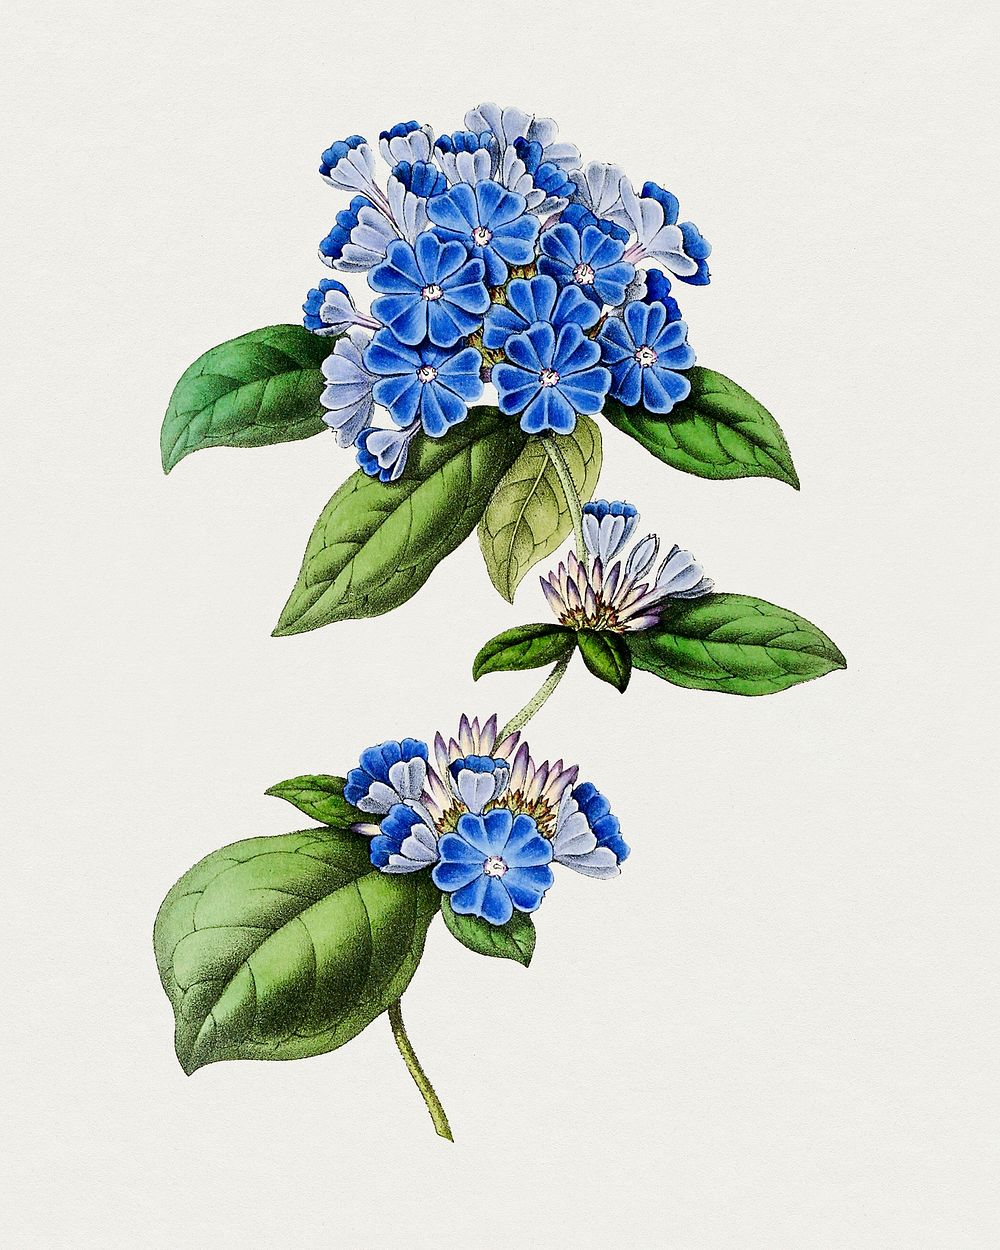 Hand drawn blue leadwort. Original from Biodiversity Heritage Library. Digitally enhanced by rawpixel.